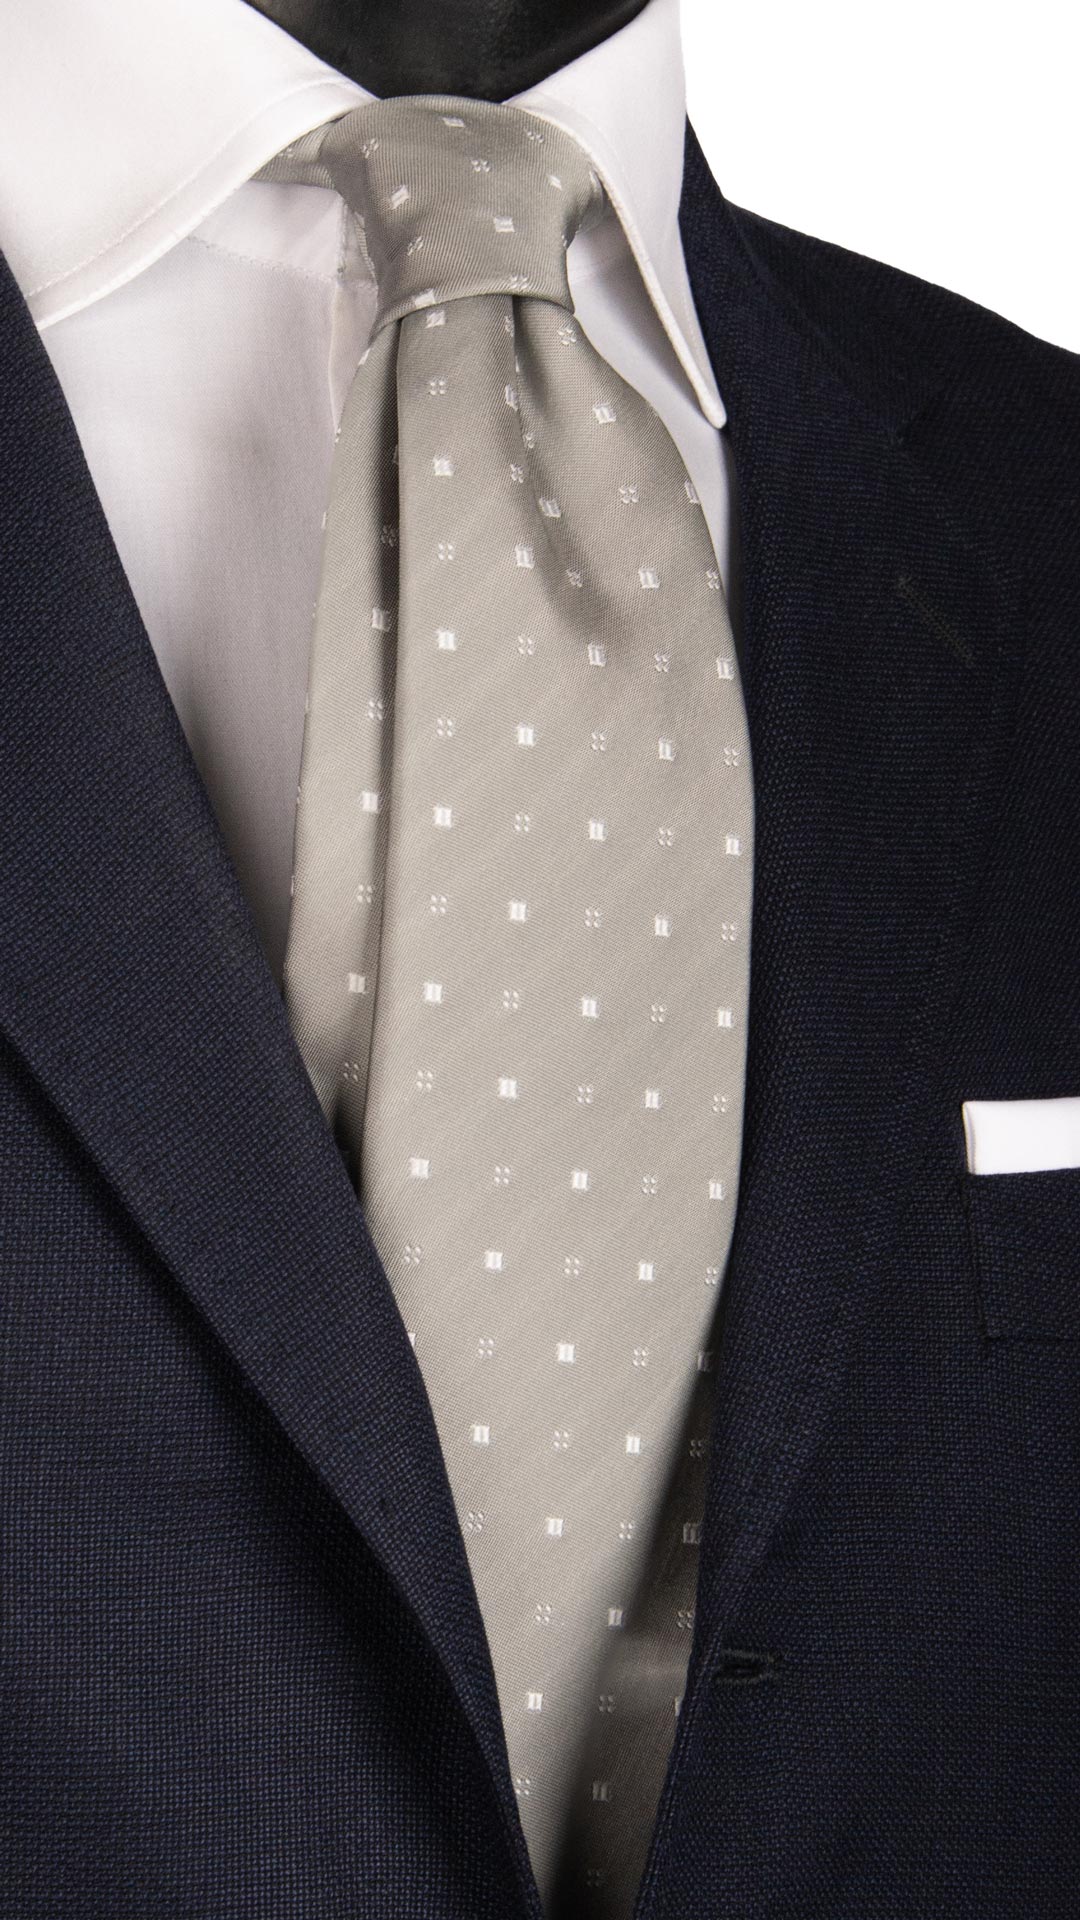 Cravatta da Cerimonia di Seta Grigia Fantasia Bianca CY6670 Made in Italy Graffeo cravatte